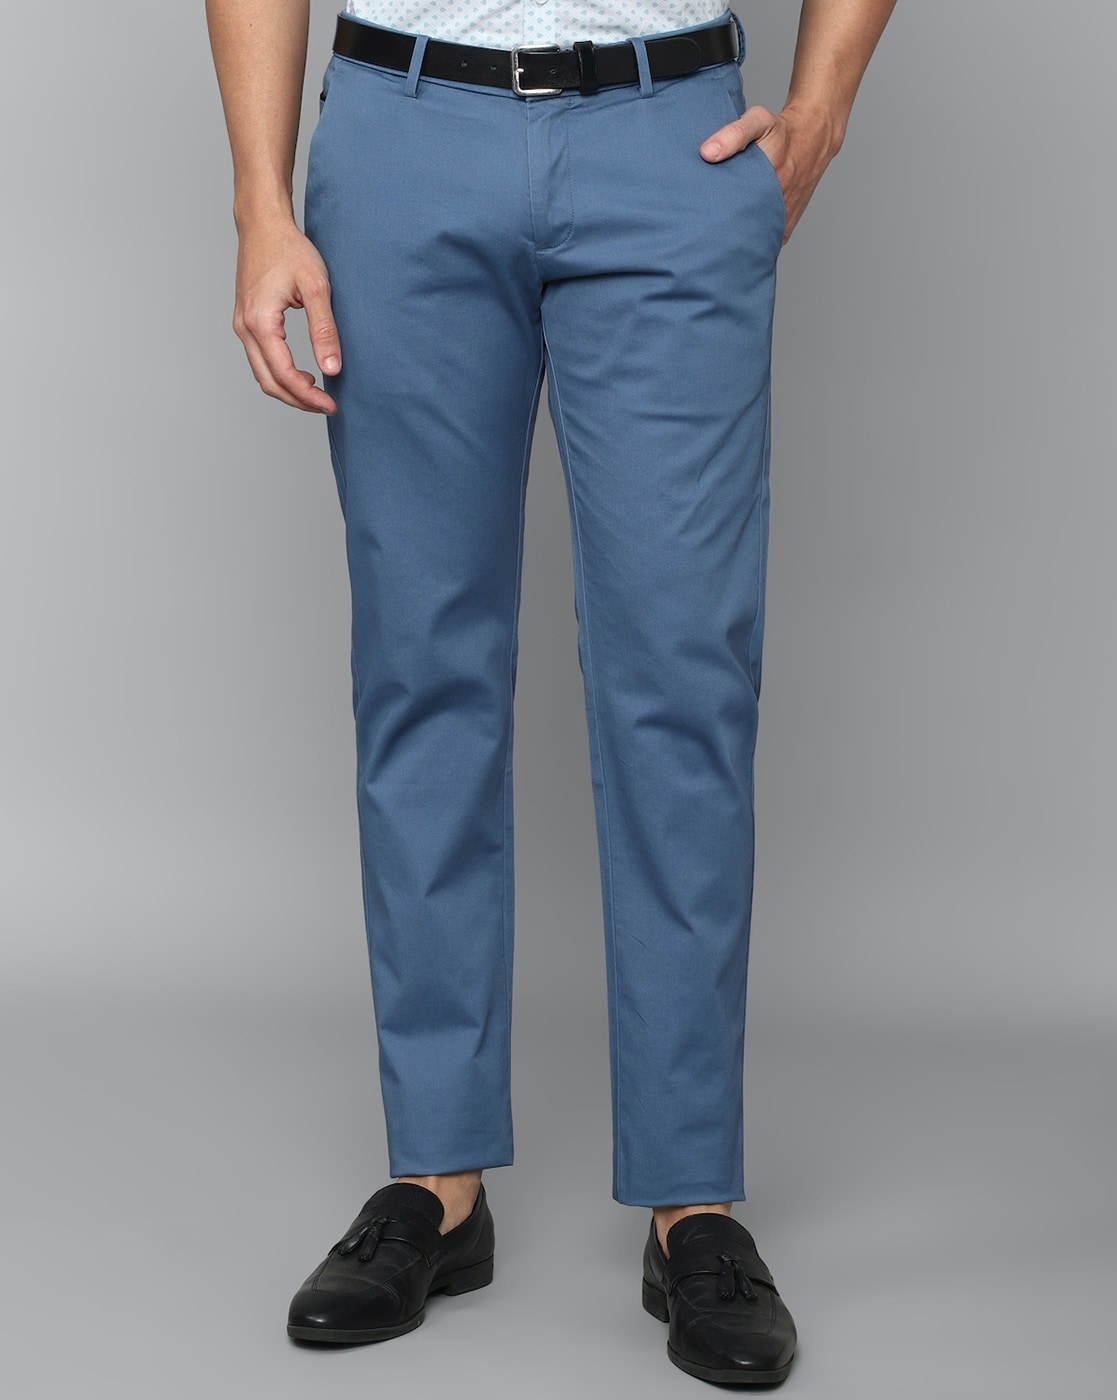 Jeans & Trousers | Allen Solly Formal Trouser | Freeup